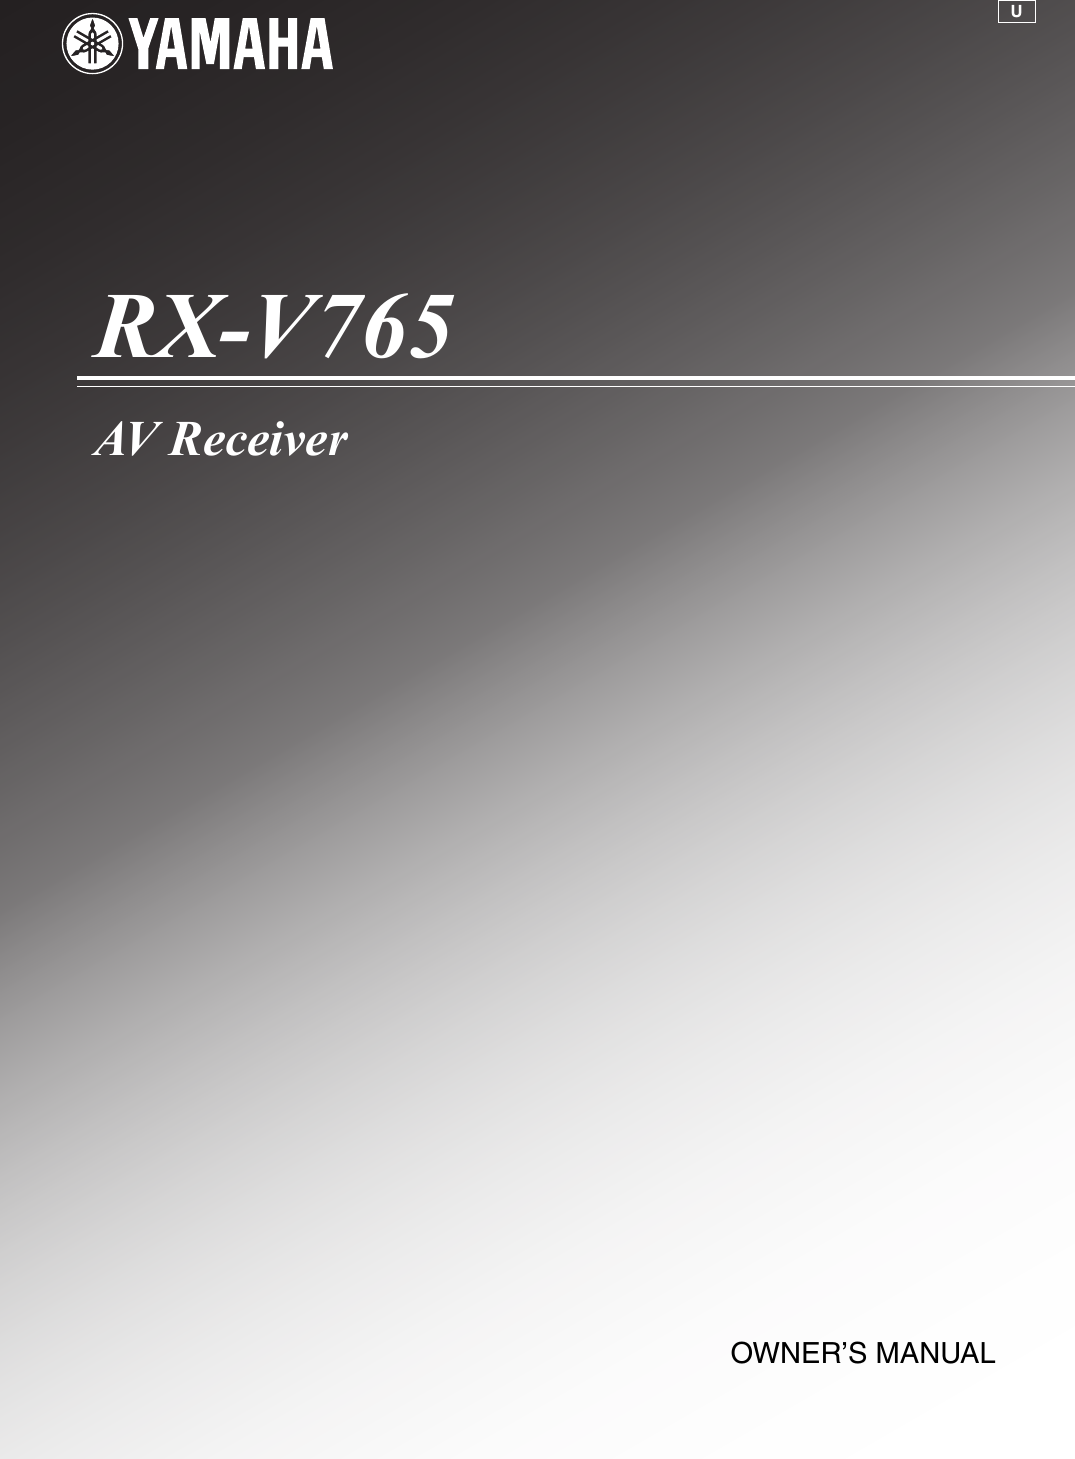 Yamaha RX V765 Owners Manual